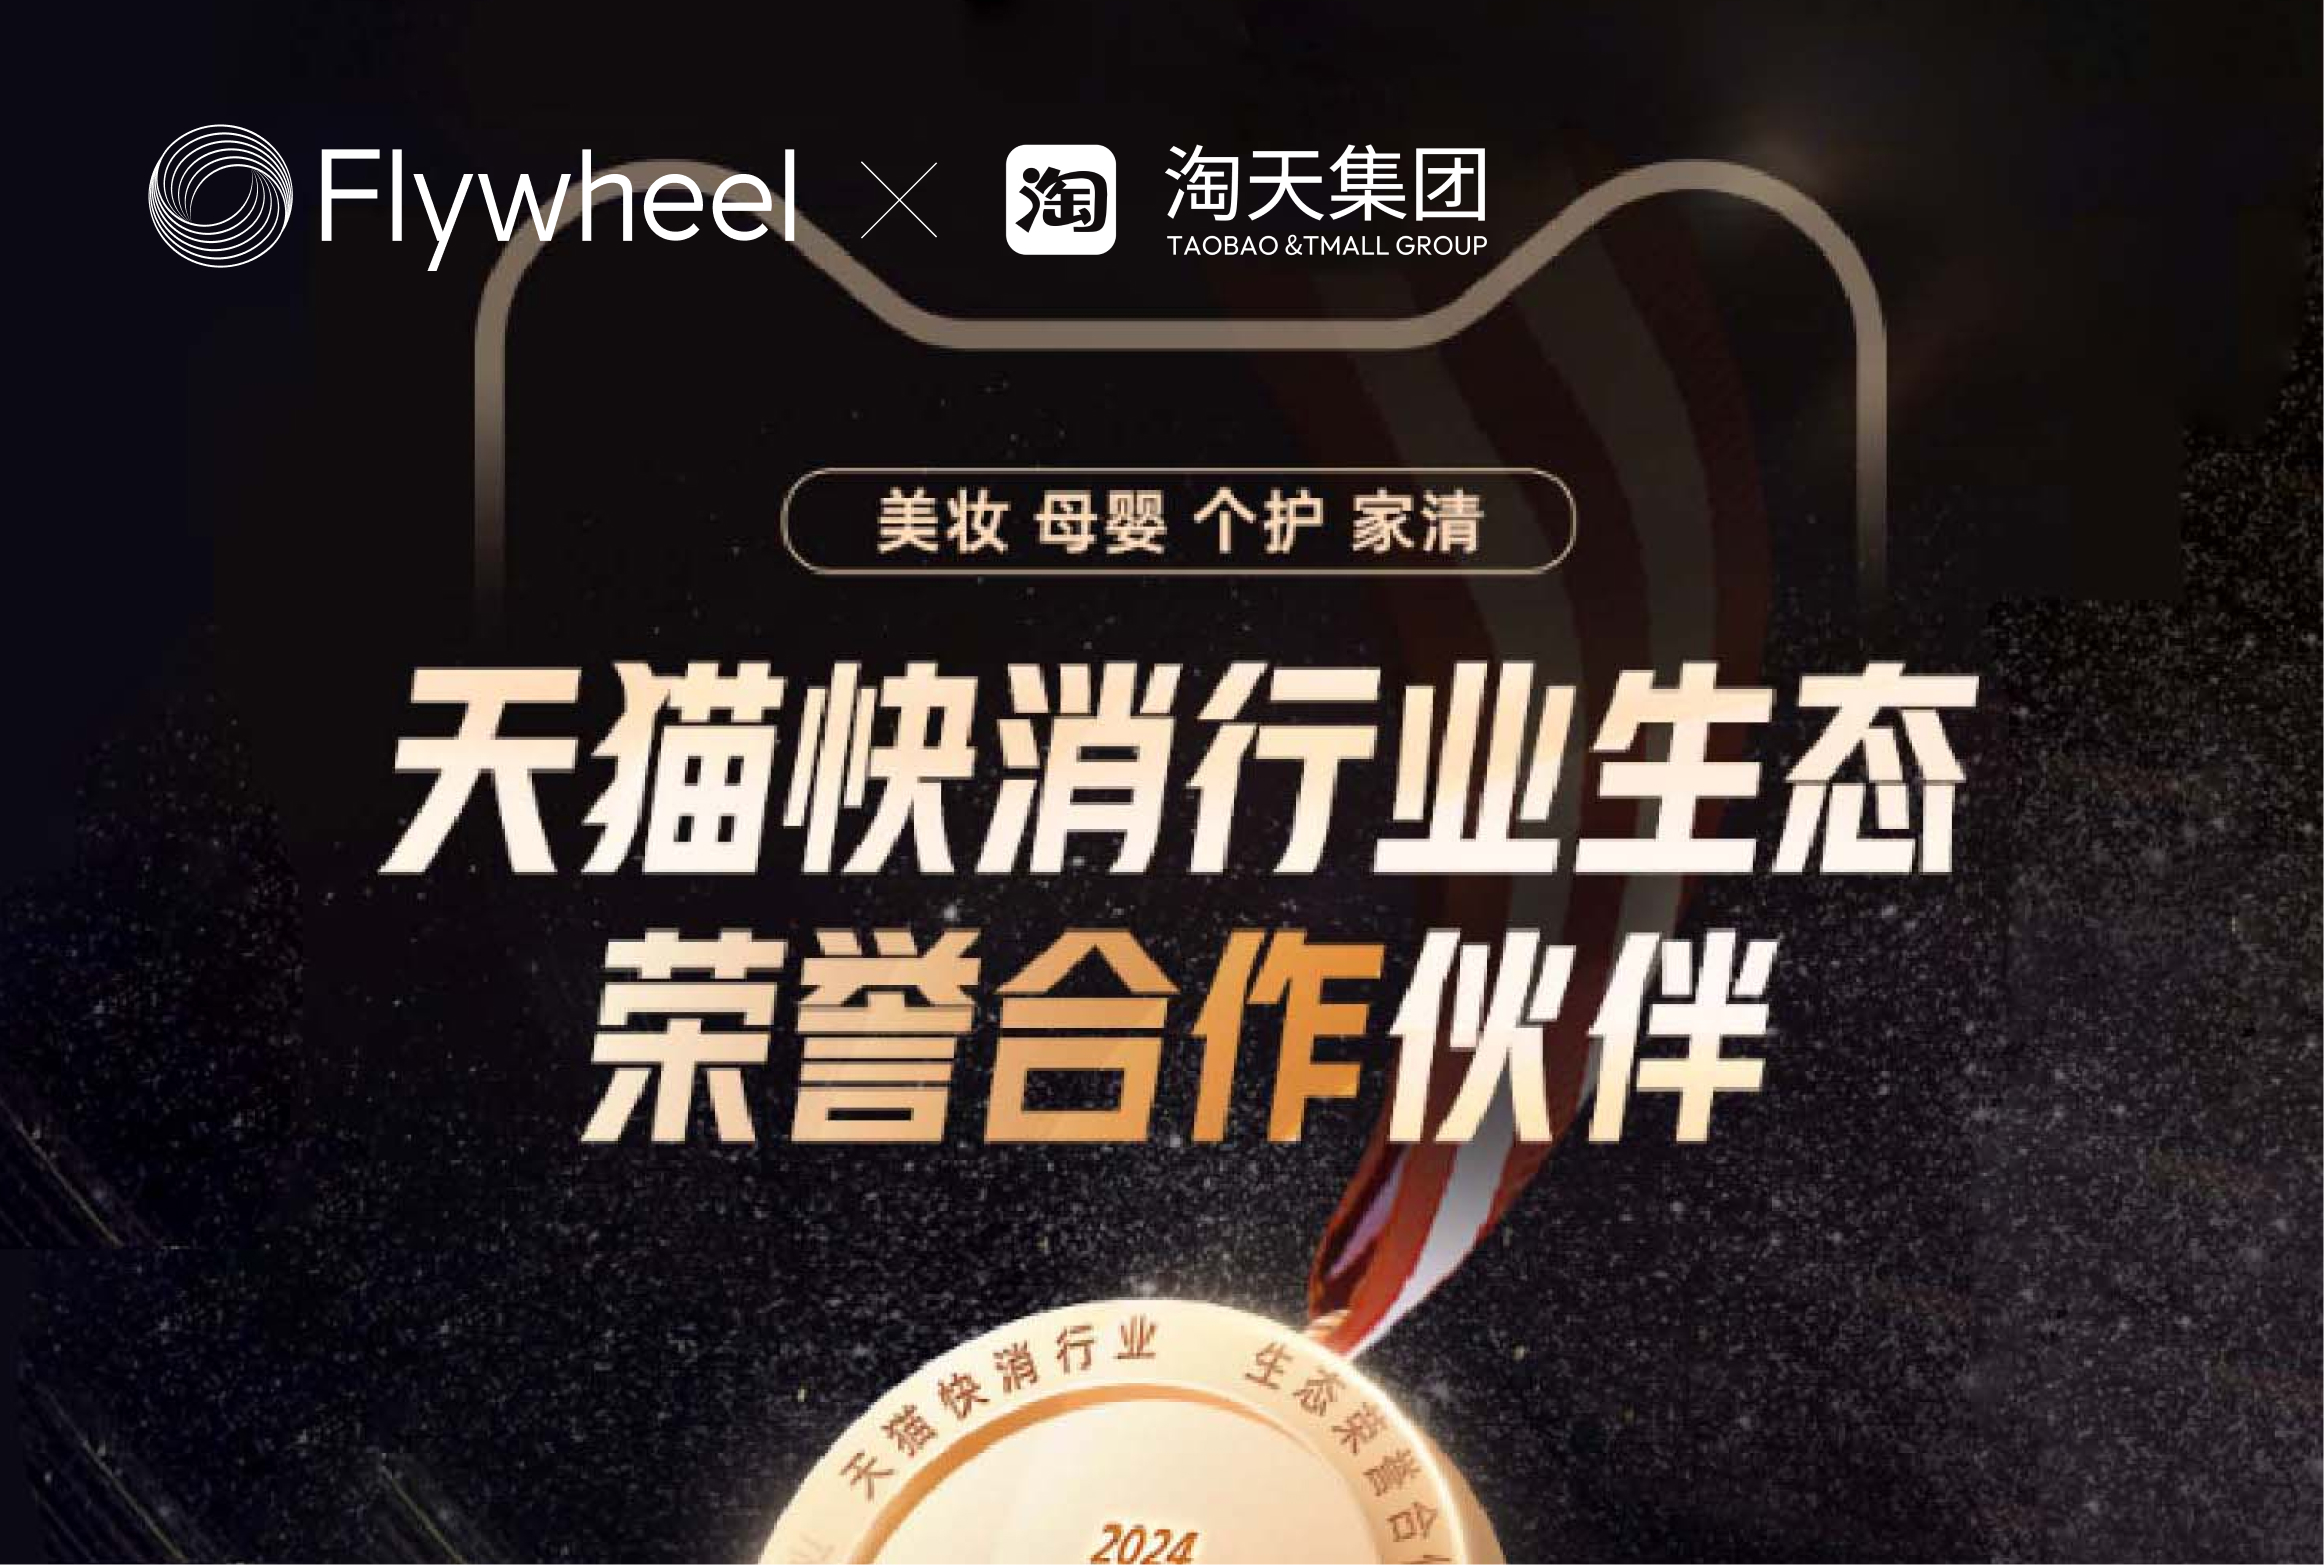 Flywheel飞未荣获天猫快消行业生态荣誉合作伙伴认证